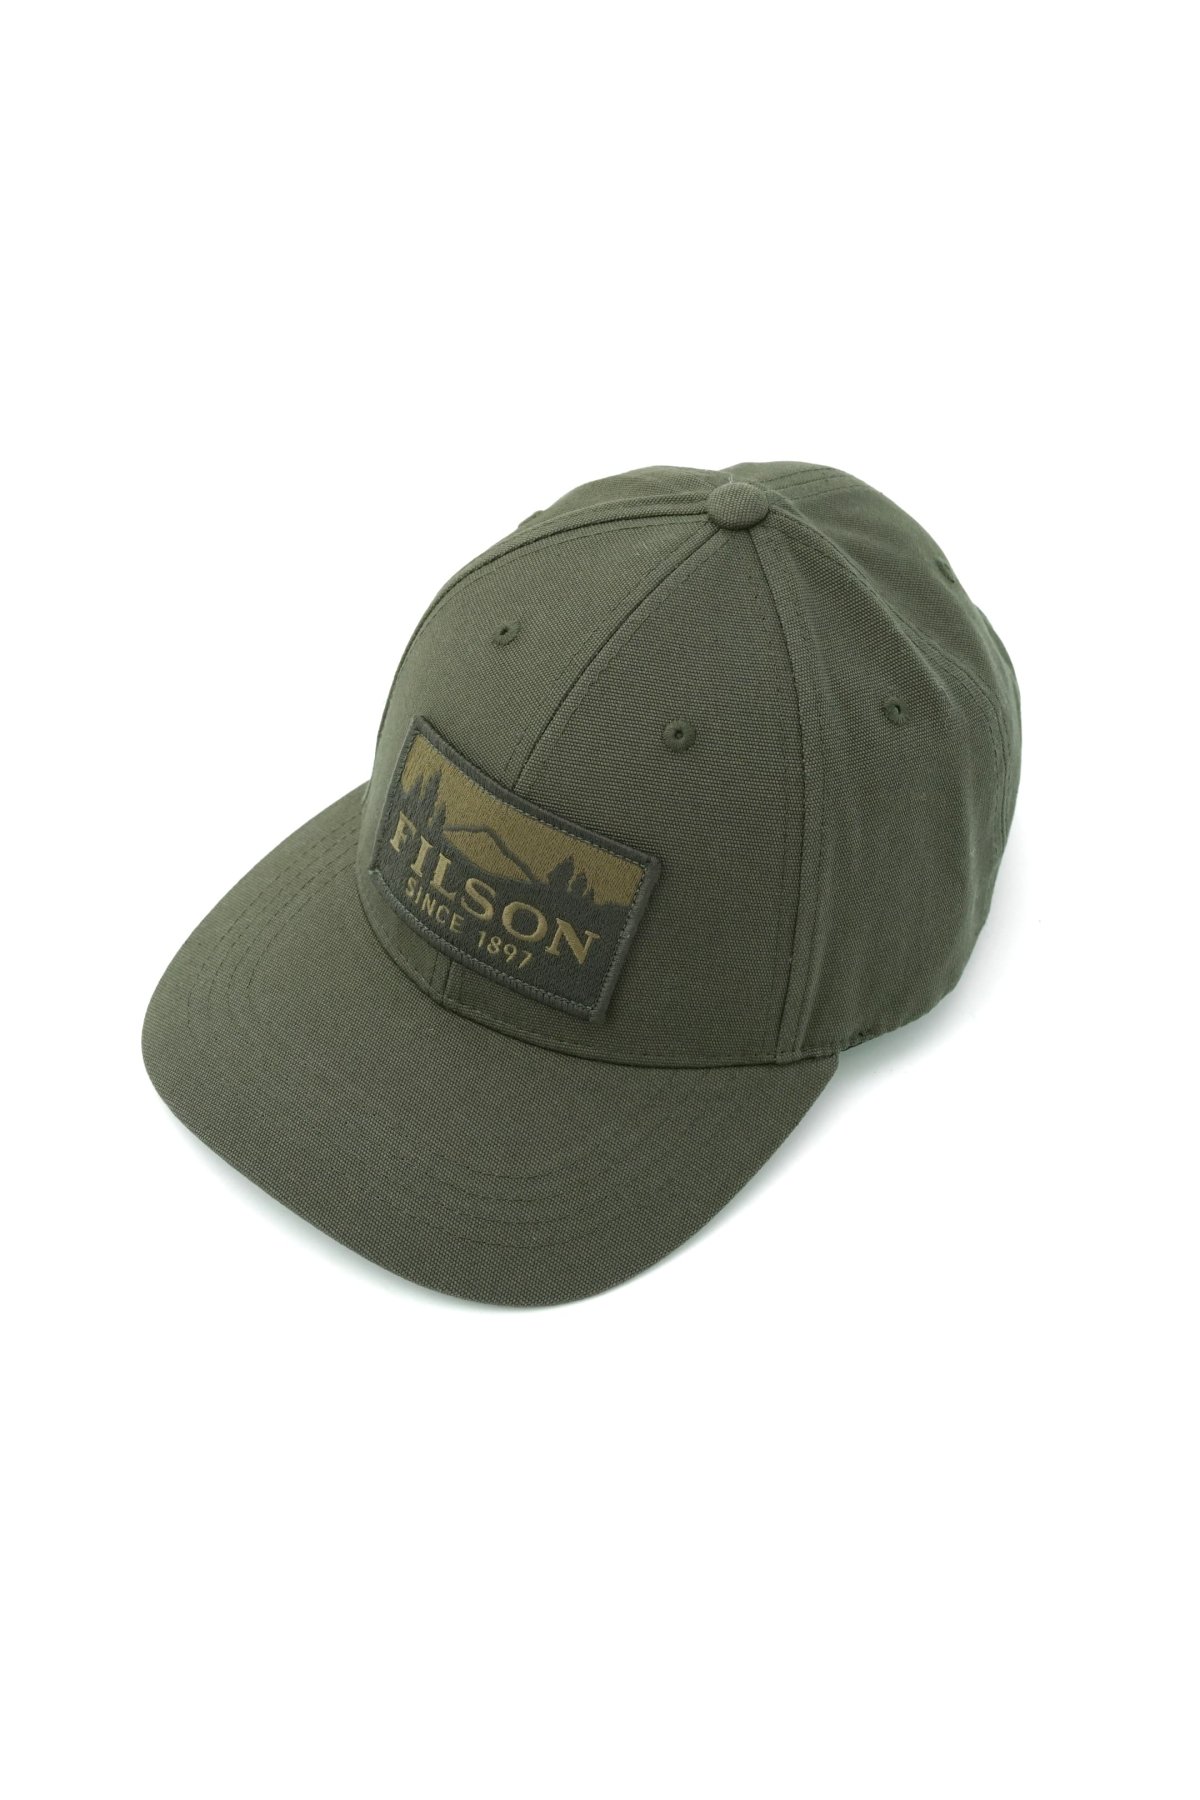 FILSON フィルソン 通販 正規店 フェートン - Phaeton Smart Clothes 